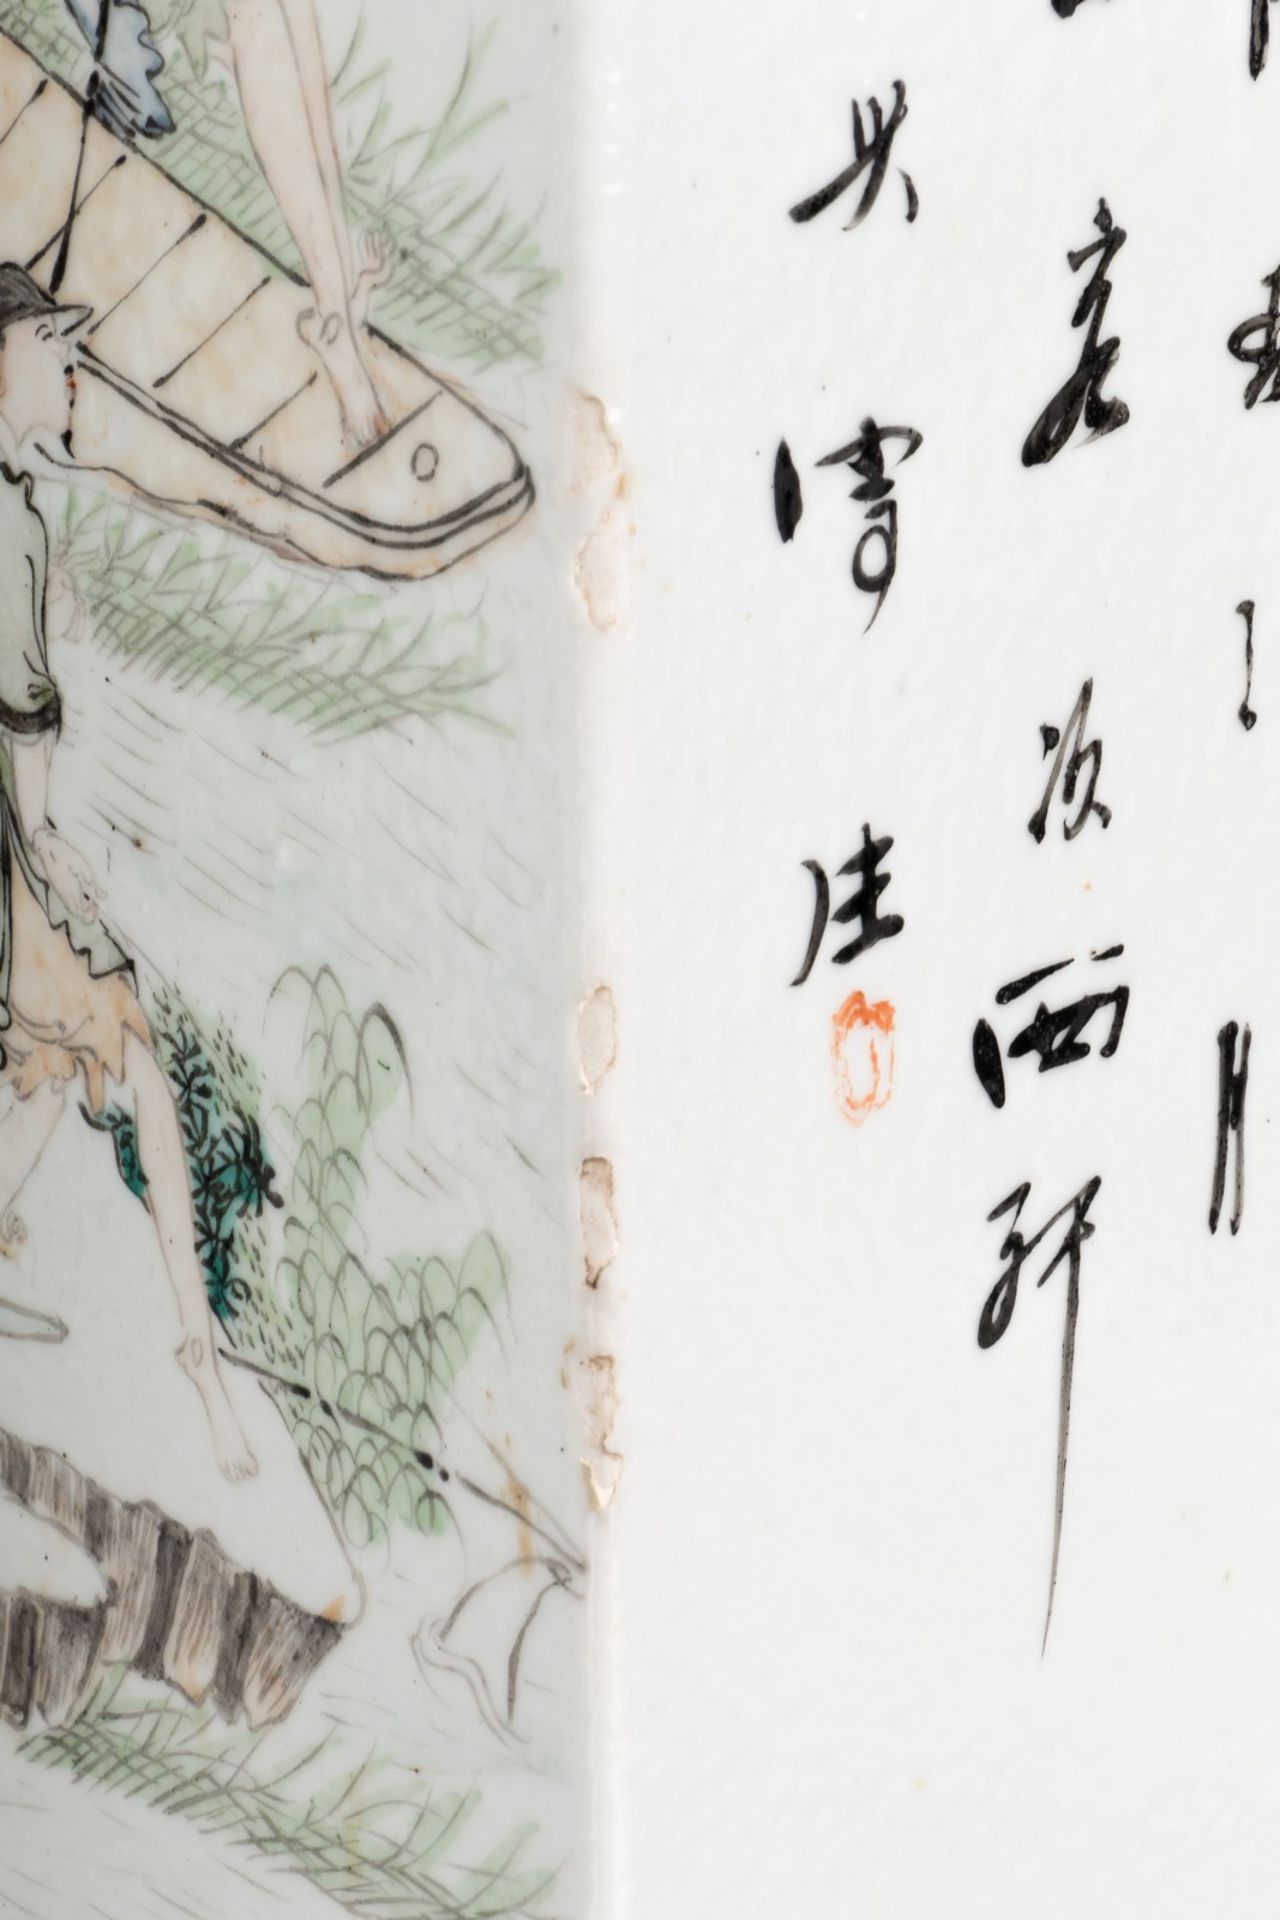 Two quadrangular vases, China, polychrome decorated with fishermen, literati and calligraphic texts, - Image 11 of 18